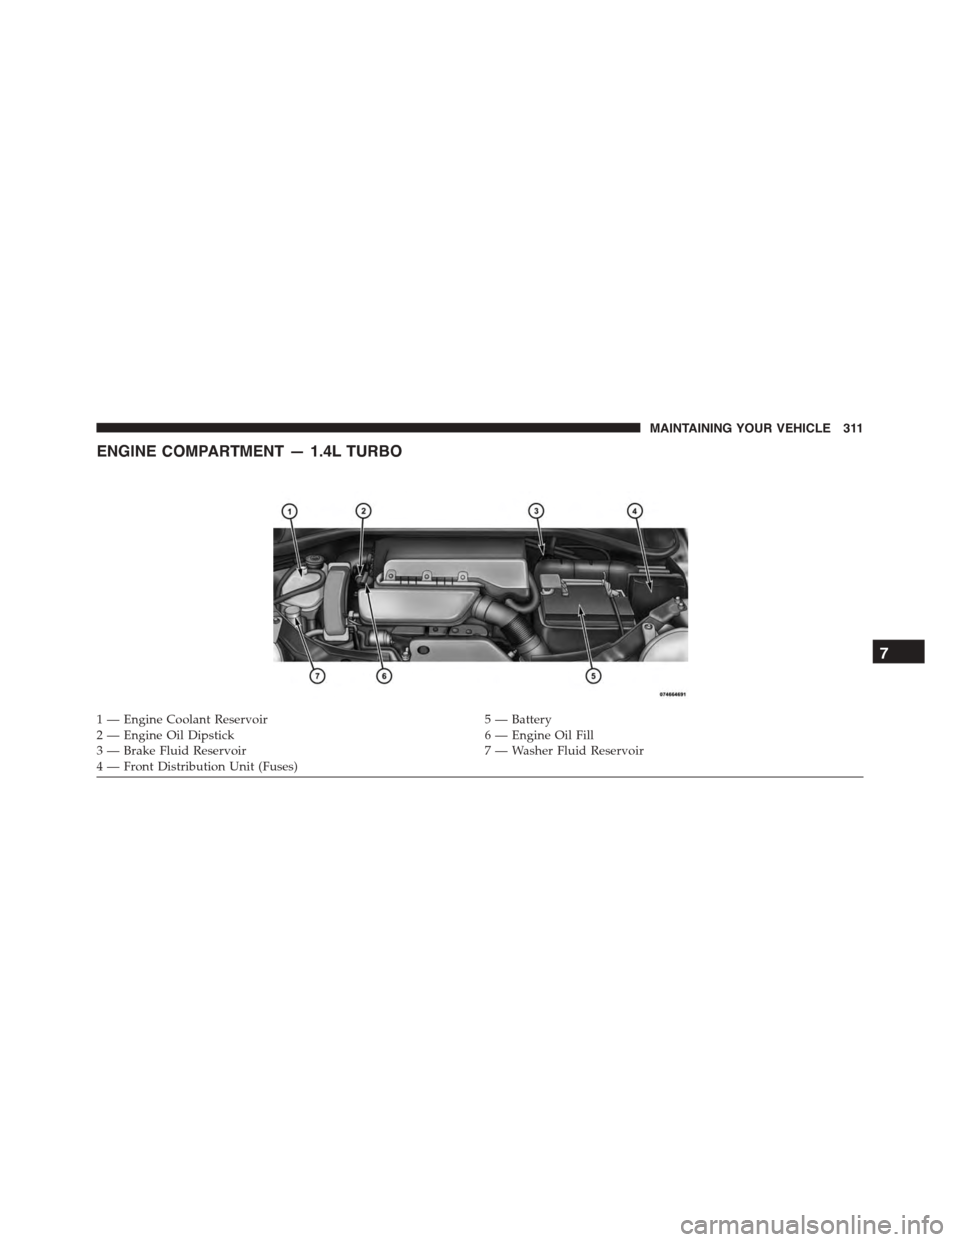 FIAT 500 ABARTH 2014 2.G Owners Manual ENGINE COMPARTMENT — 1.4L TURBO
1 — Engine Coolant Reservoir5 — Battery2—EngineOilDipstick6—EngineOilFill3 — Brake Fluid Reservoir7 — Washer Fluid Reservoir4—FrontDistributionUnit(Fuse